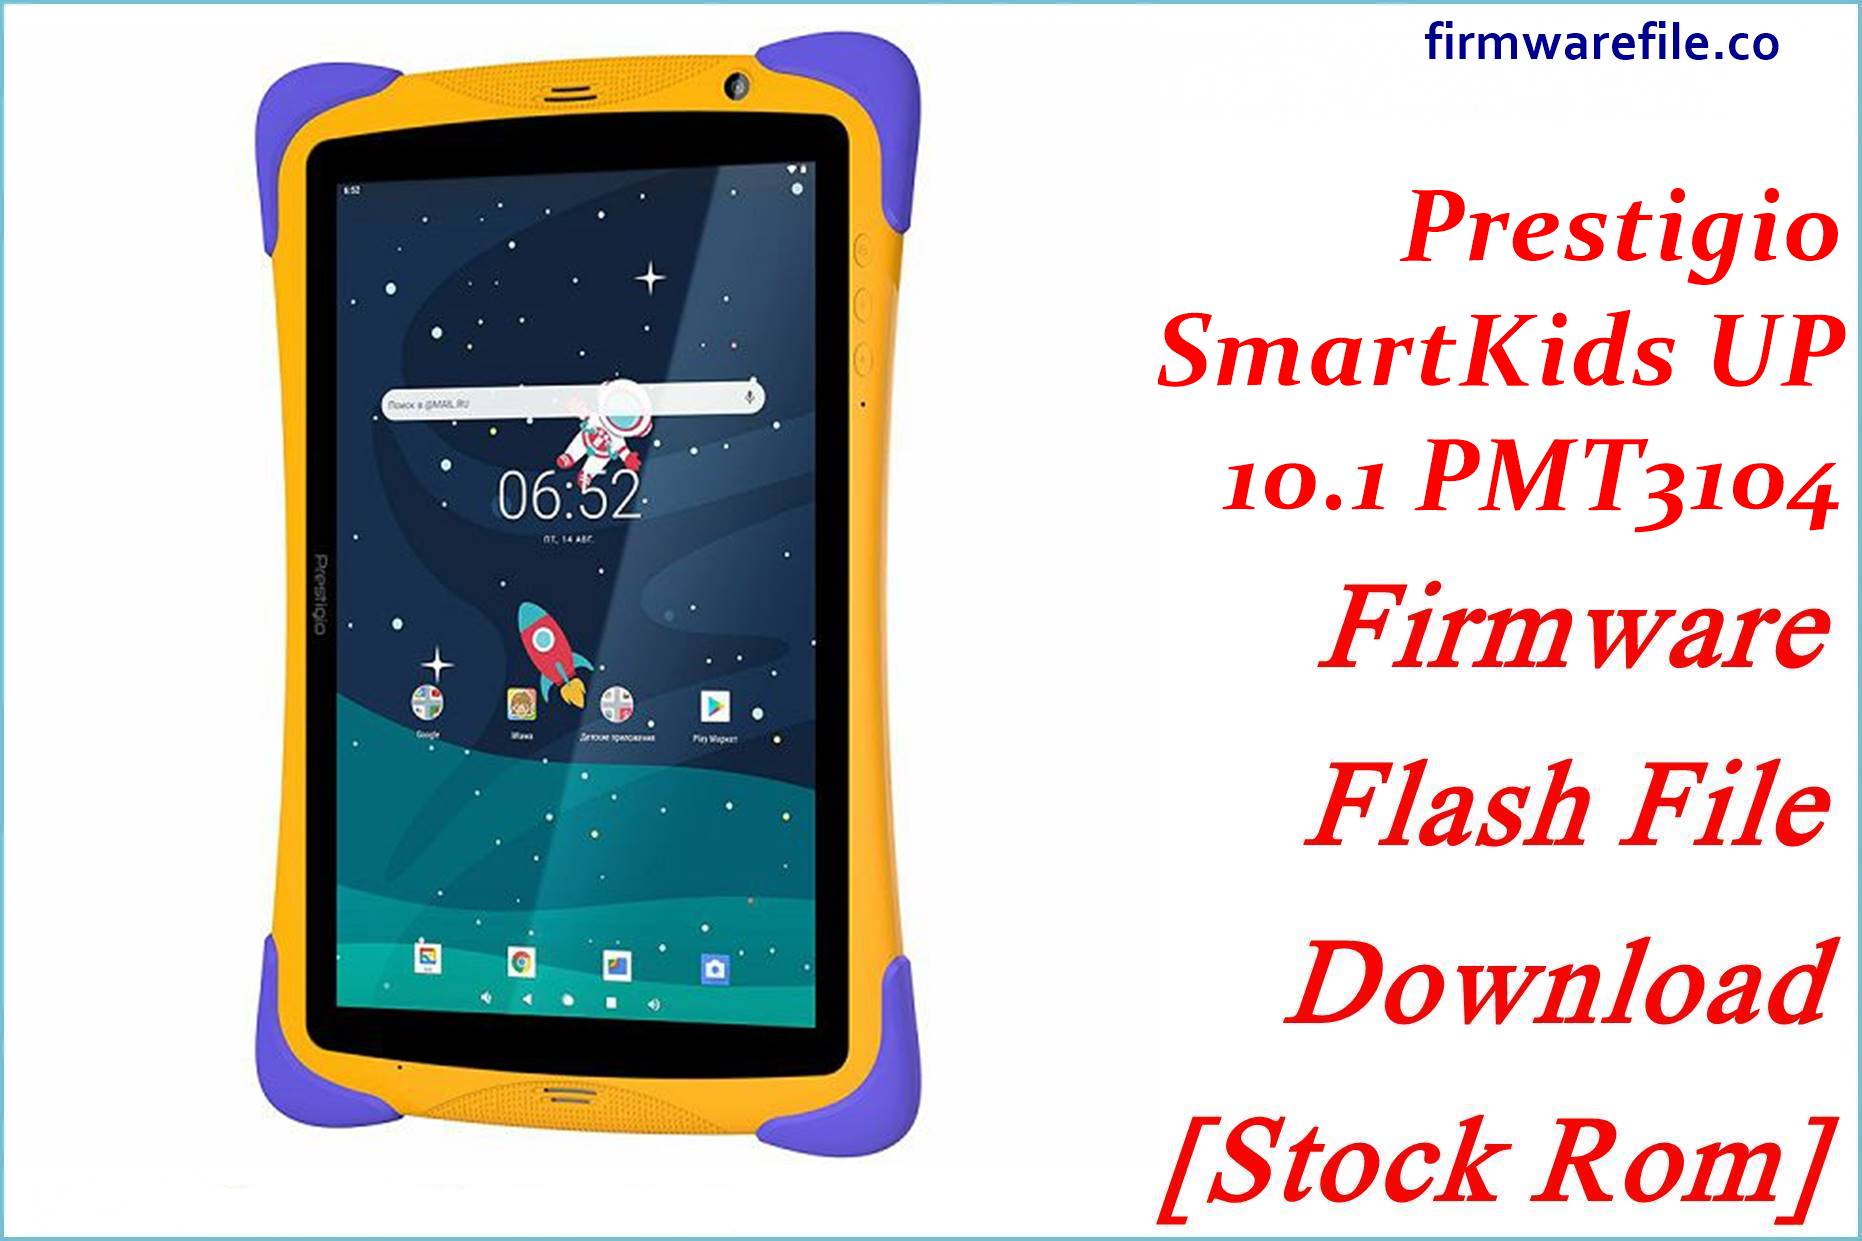 Prestigio SmartKids UP 10.1 PMT3104 Firmware Flash File Download [Stock Rom]